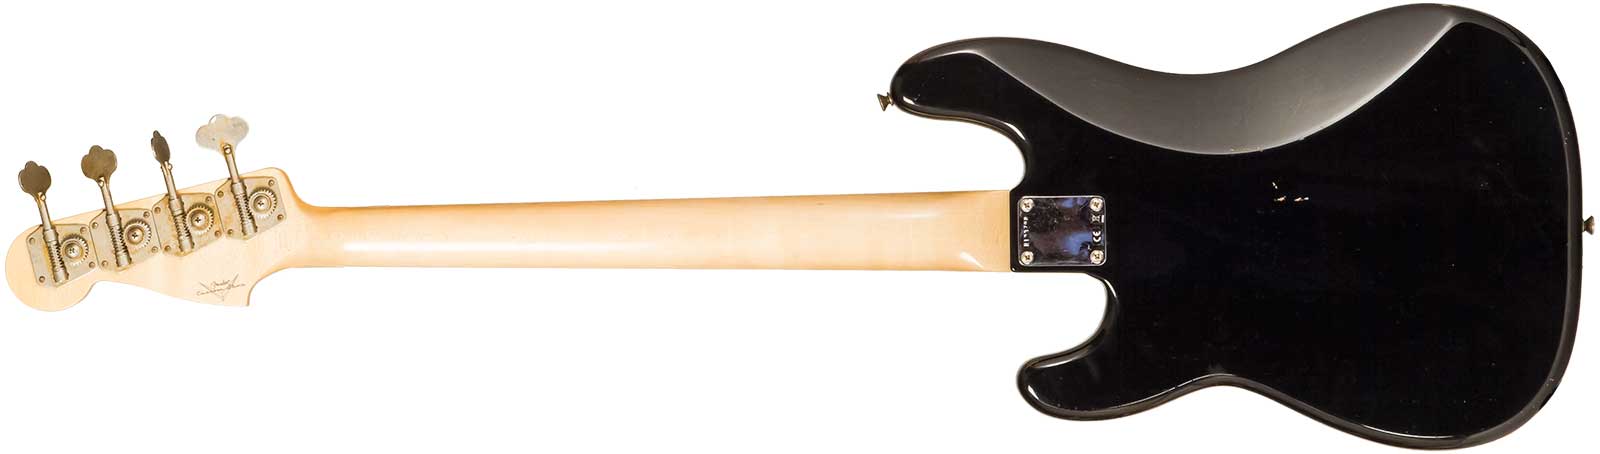 Fender Custom Shop Precision Bass 1962 Rw #r133798 - Journey Man Relic Black - Basse Électrique Solid Body - Variation 1